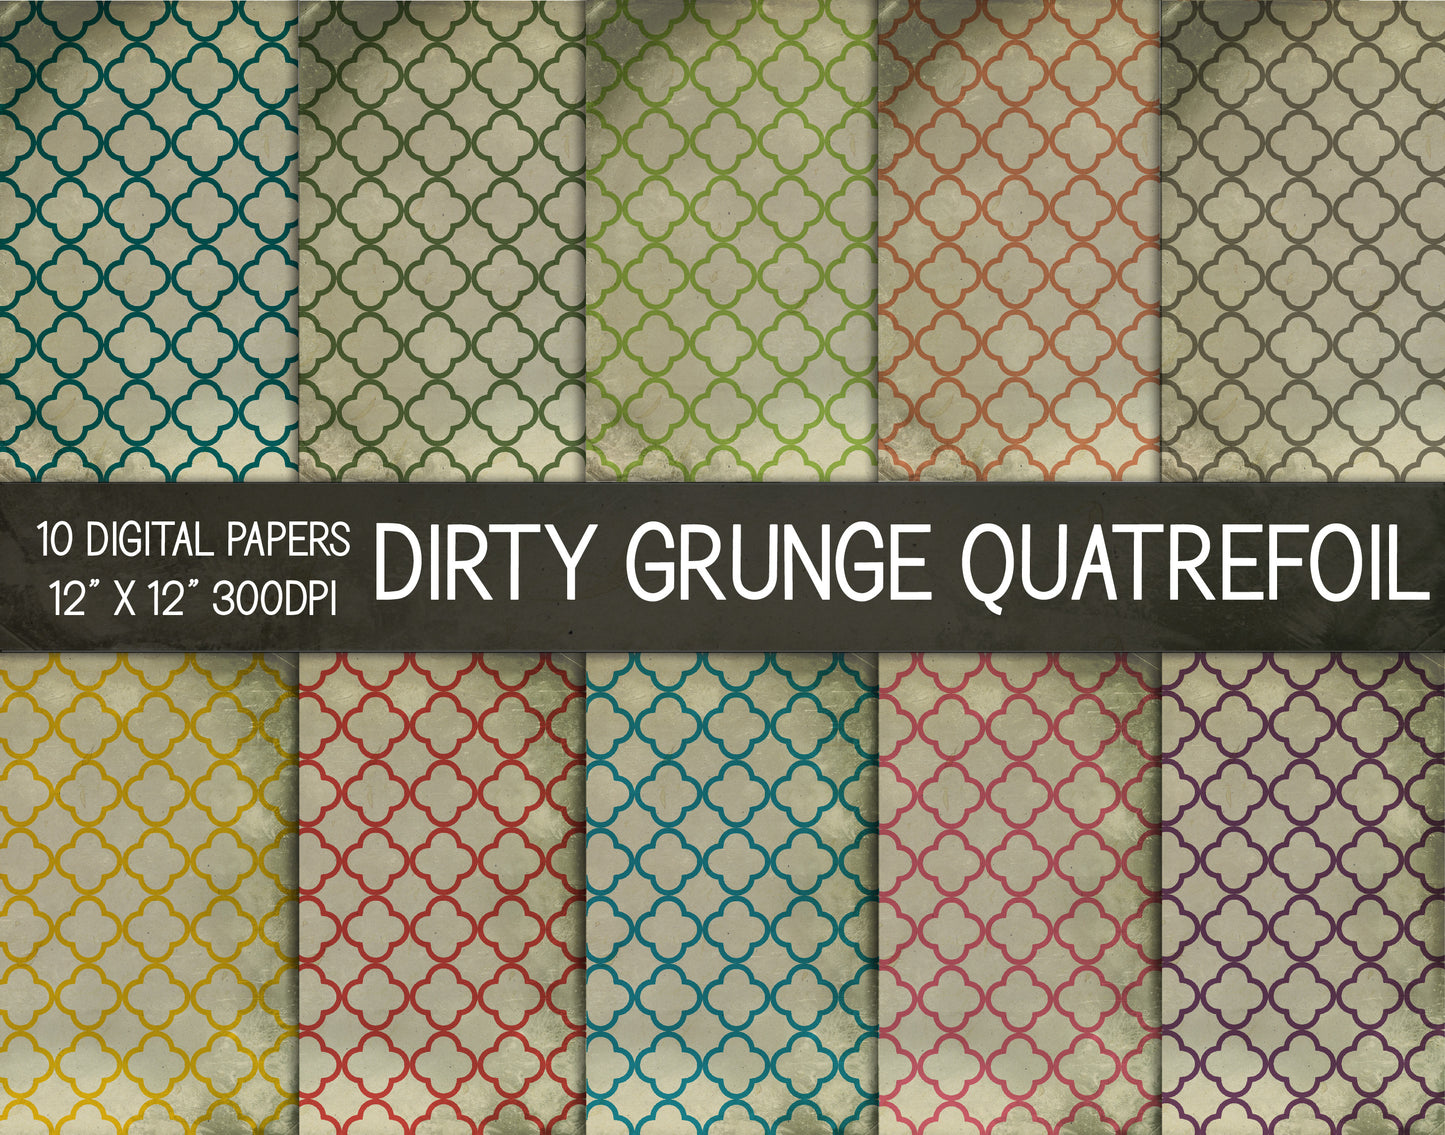 Dirty Grunge Quatrefoil Digital Papers, Grunge Texture Paper